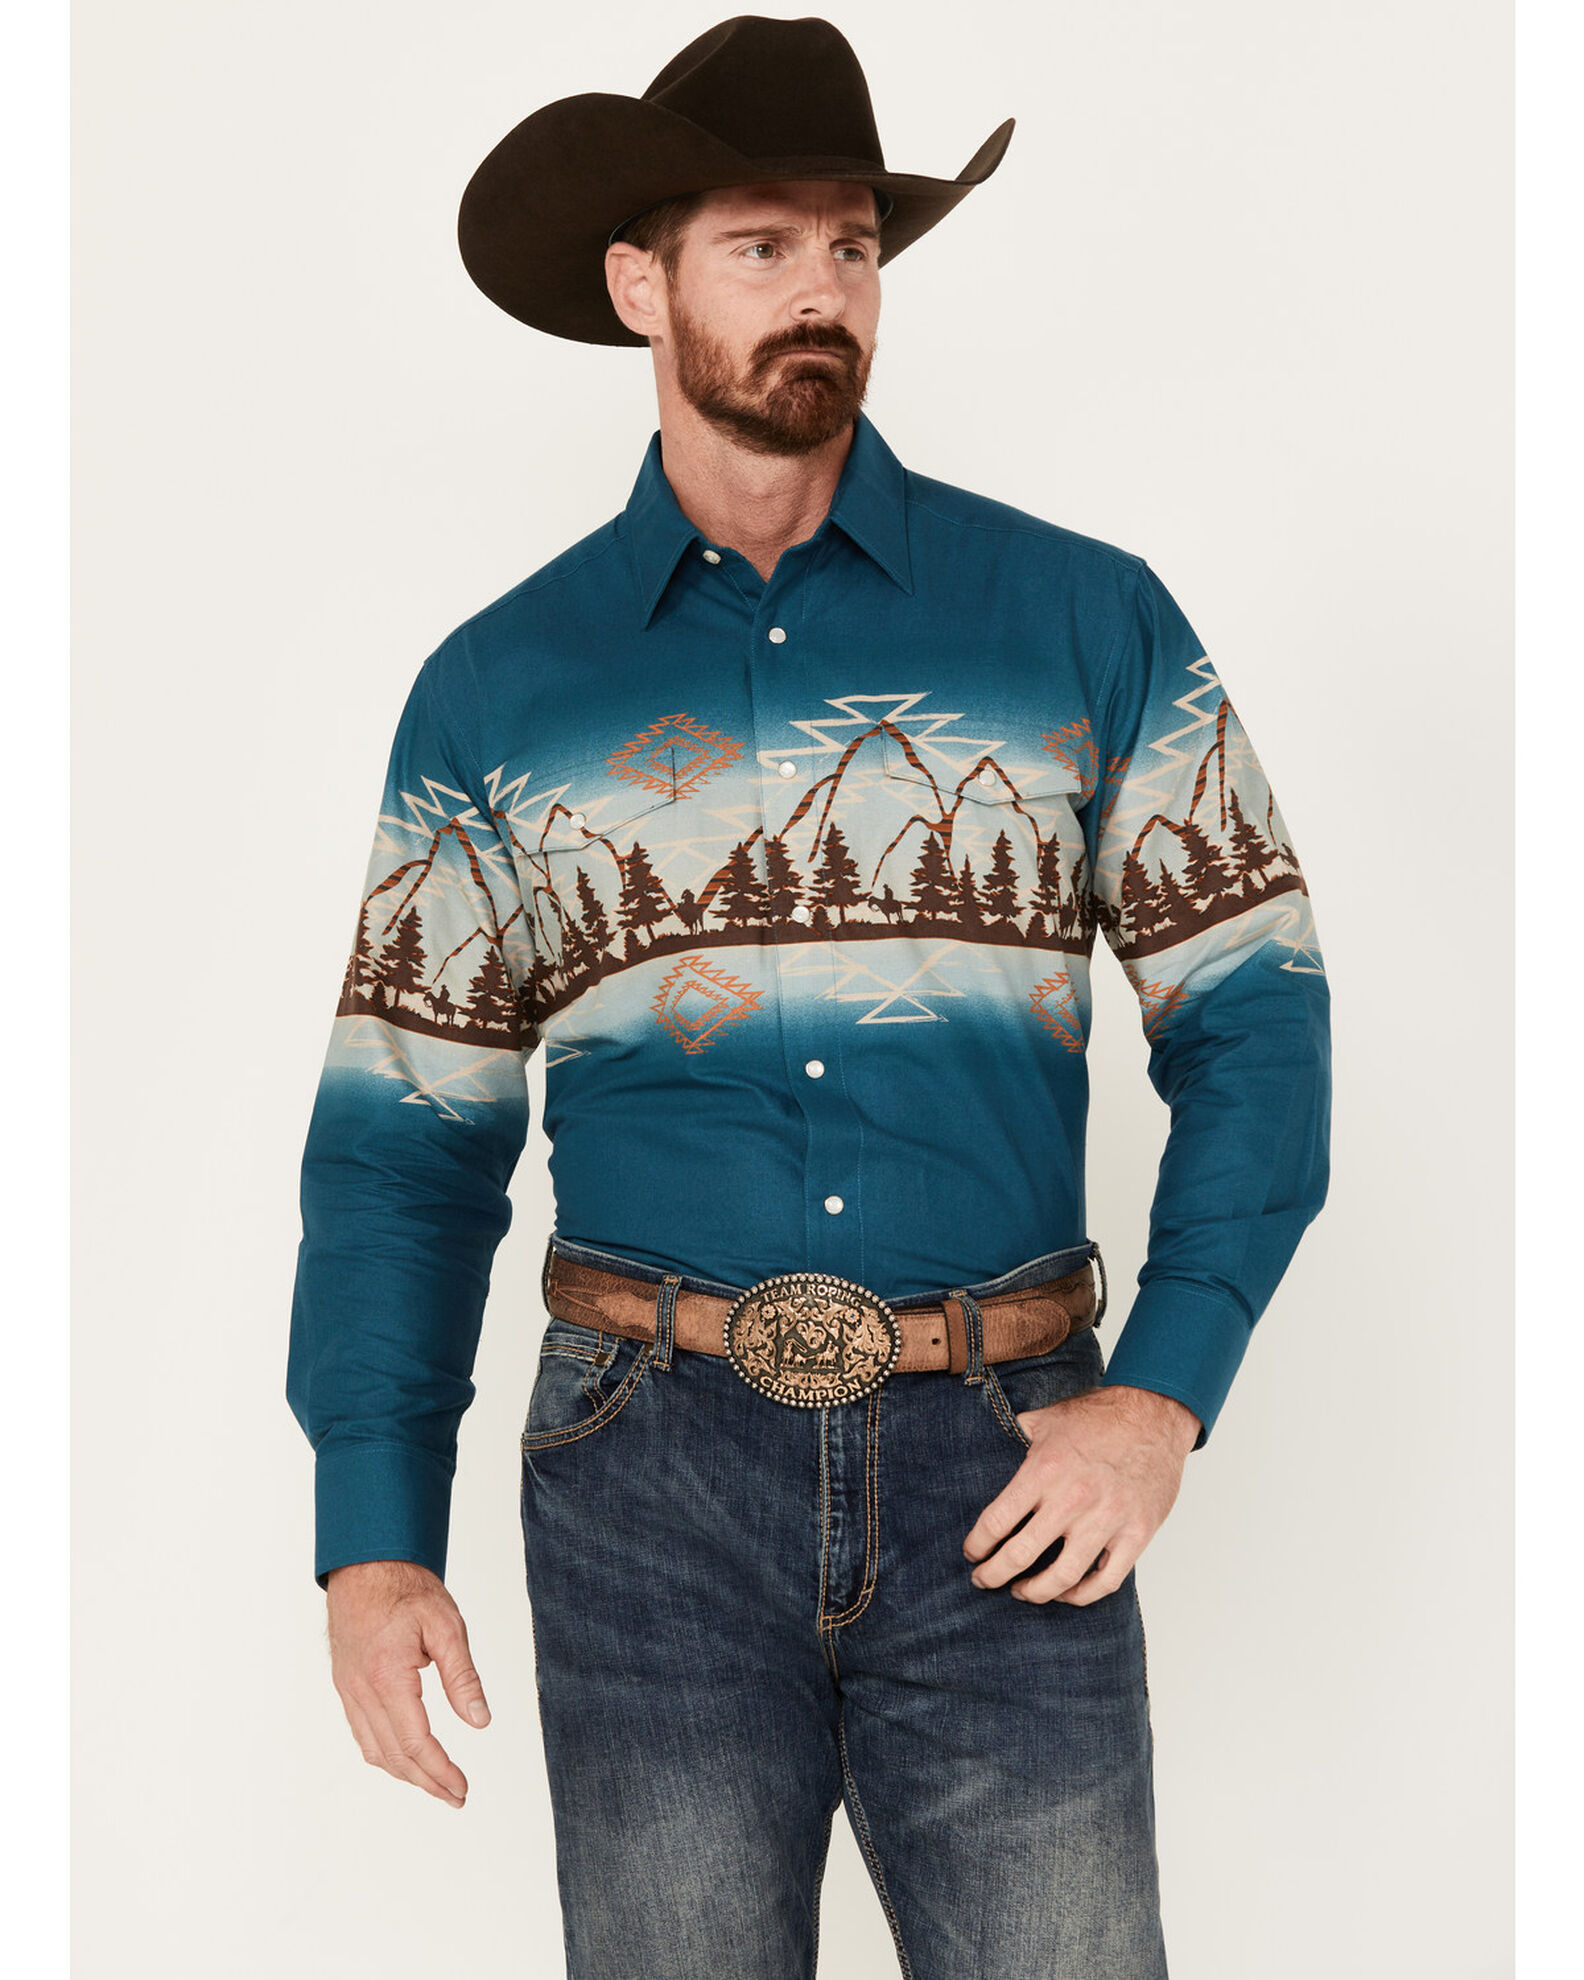 Border Town, Shirts, Border Town Vintage Western Shirt Mens Size Xl Green  Plaid Pearl Snaps